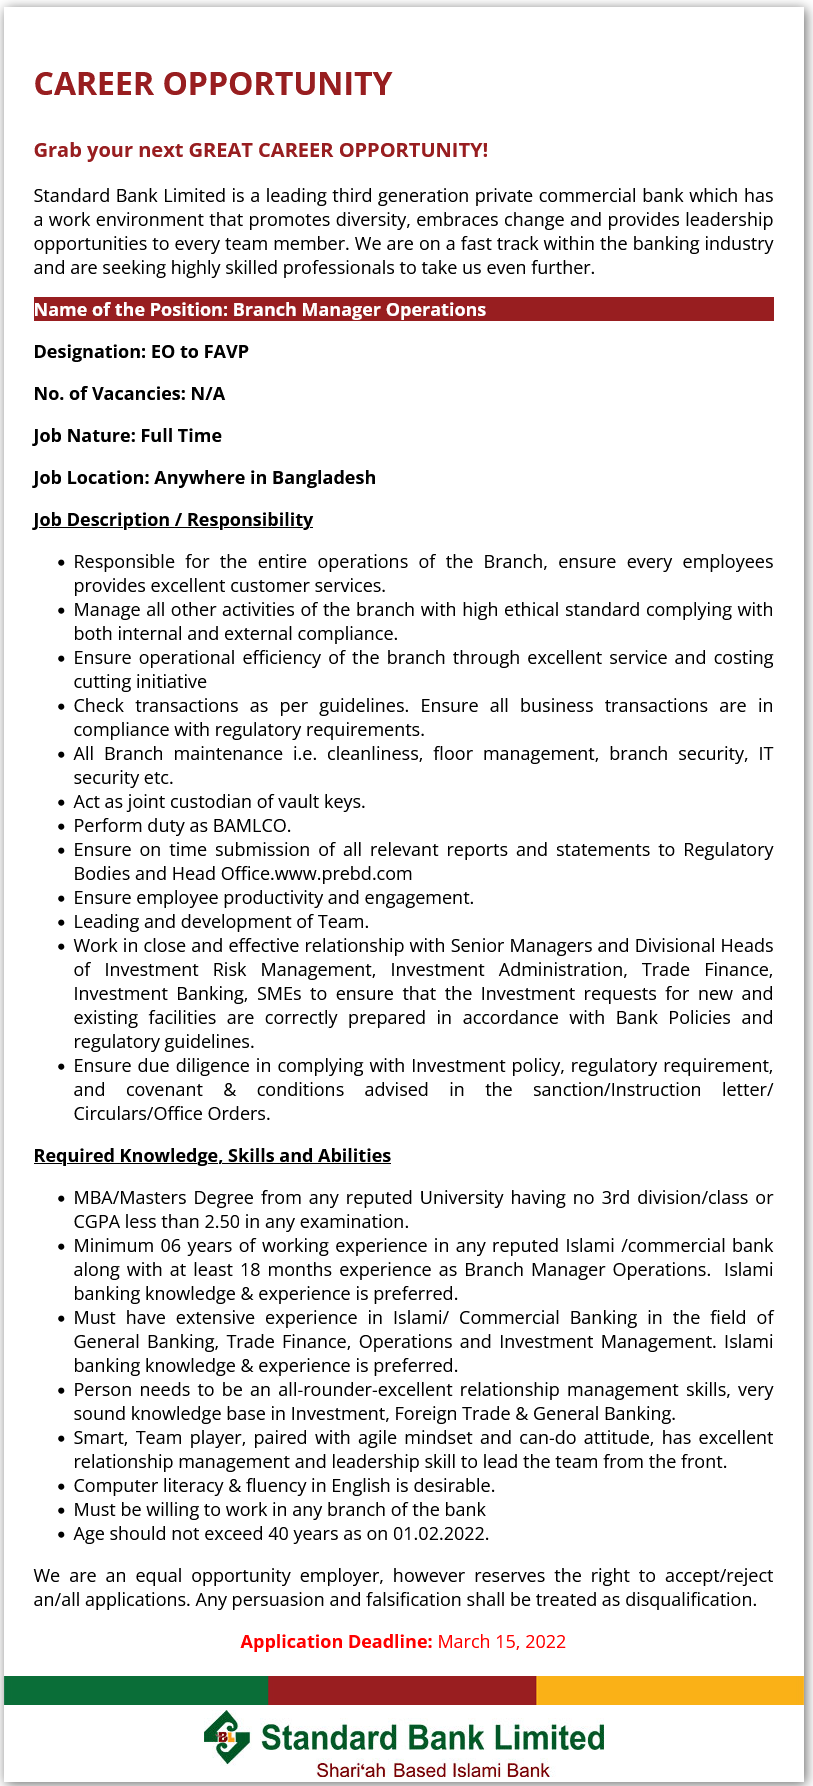 Standard Bank Limited Job Circular 2022- Apply online